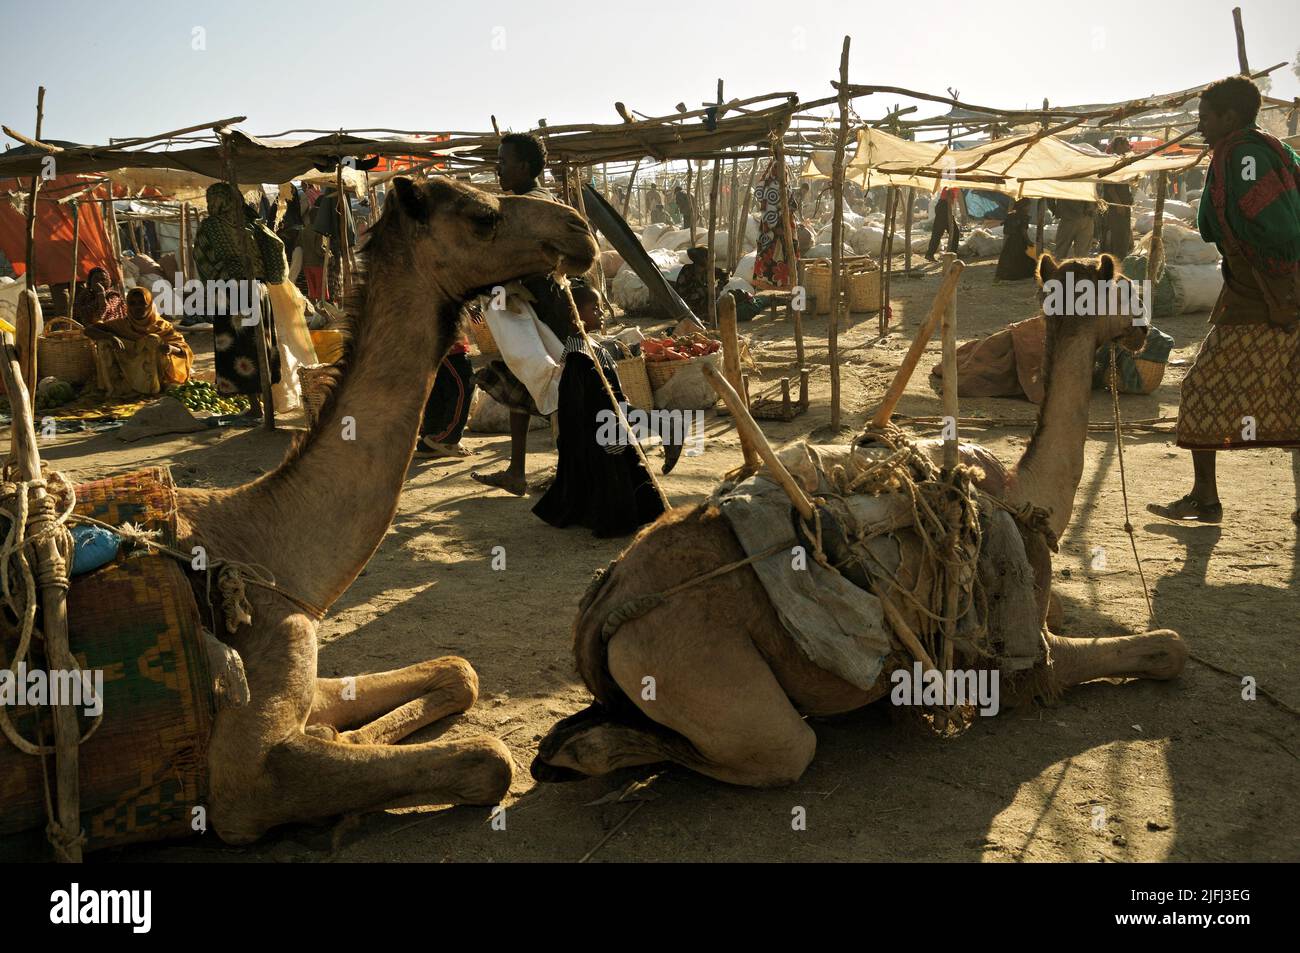 Two camels at Bati market, Amhara Region, Ethiopia Stock Photo